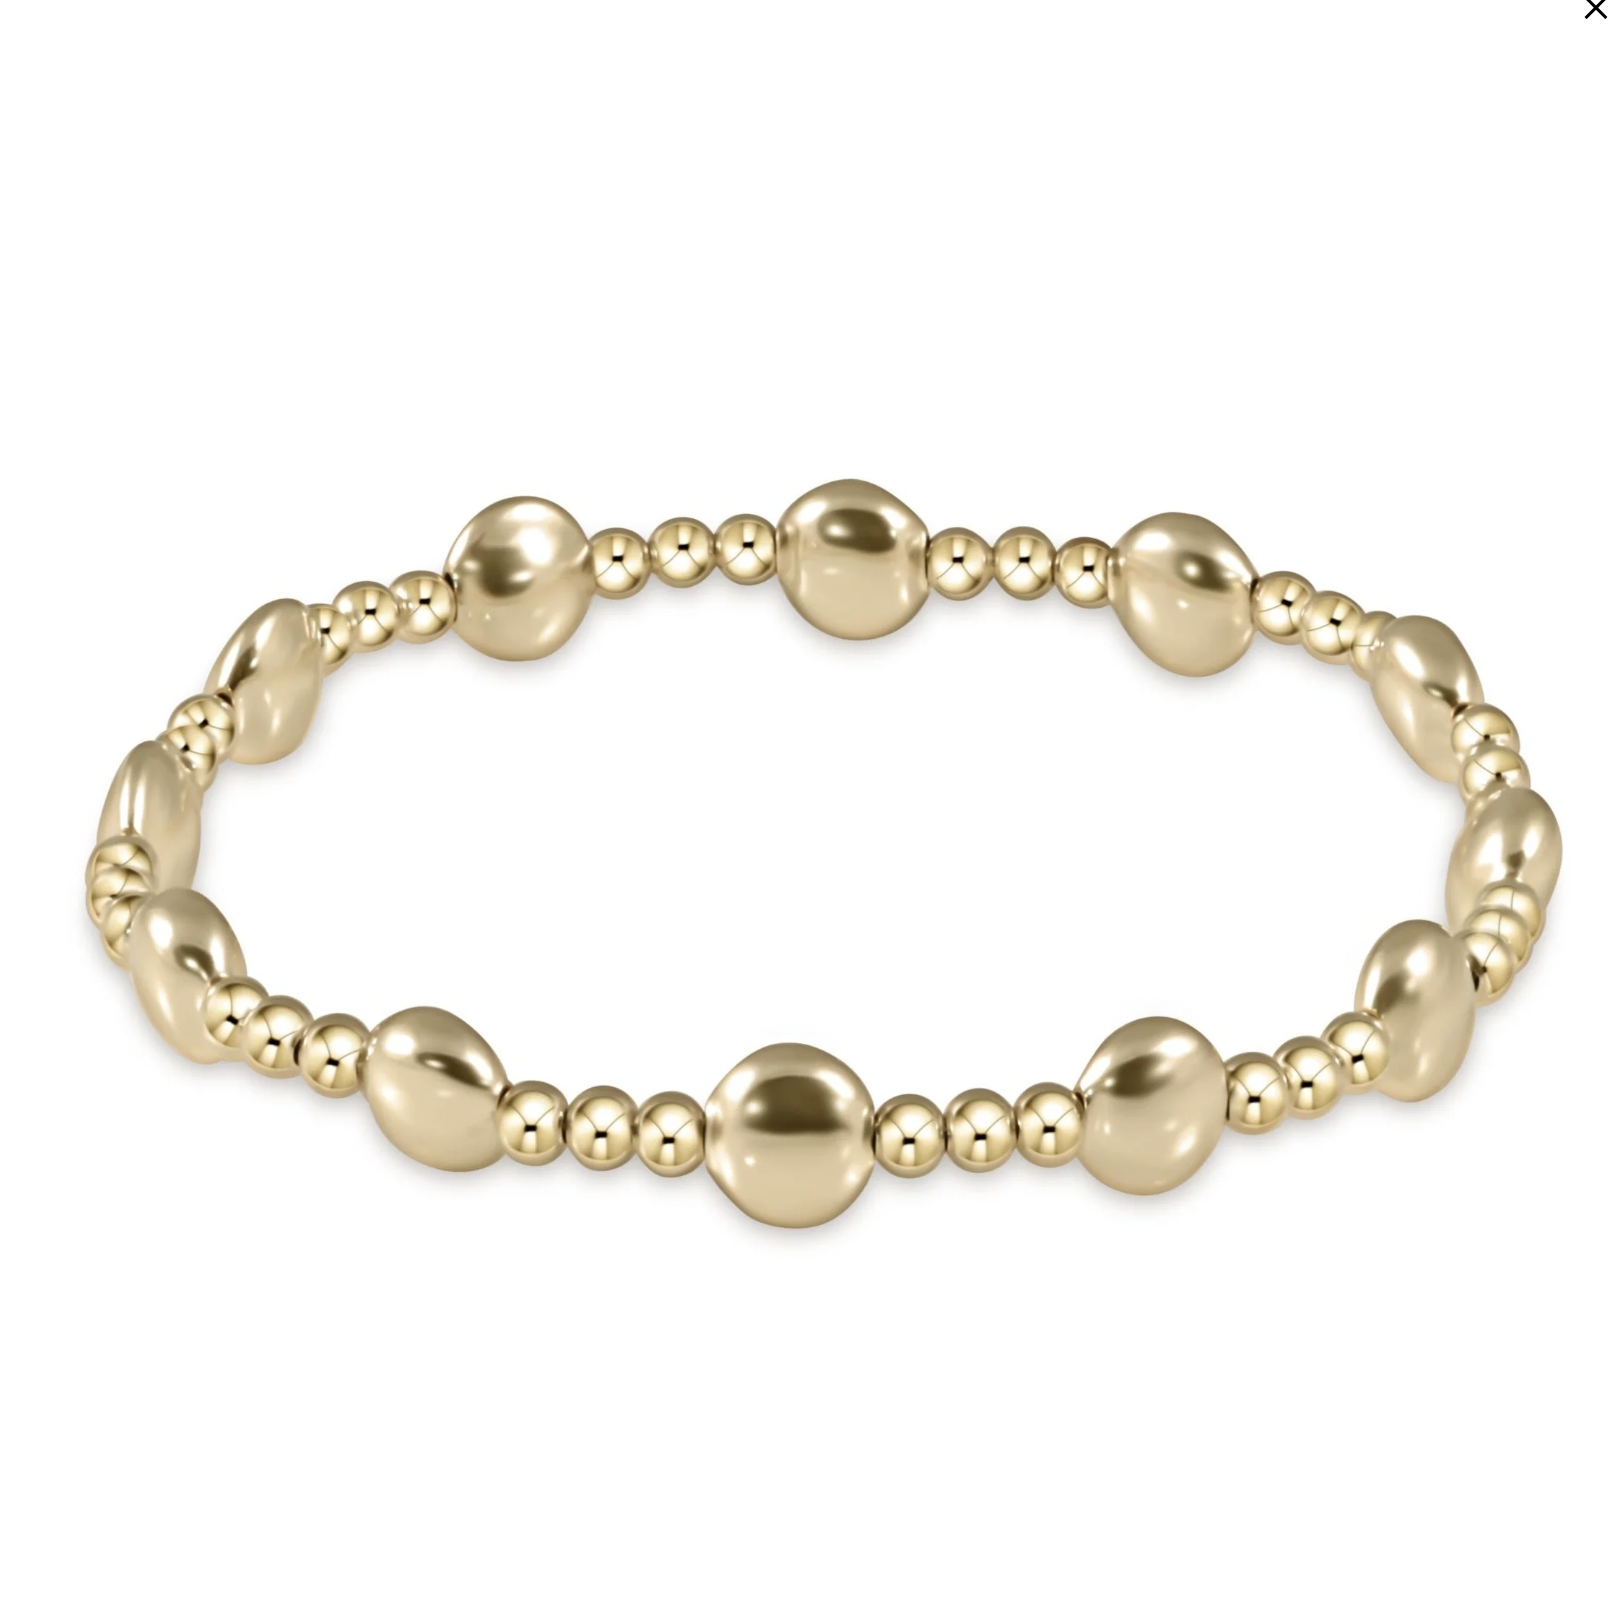 Enewton Extends Classic Joy Pattern Bead Bracelet - Gold 6mm